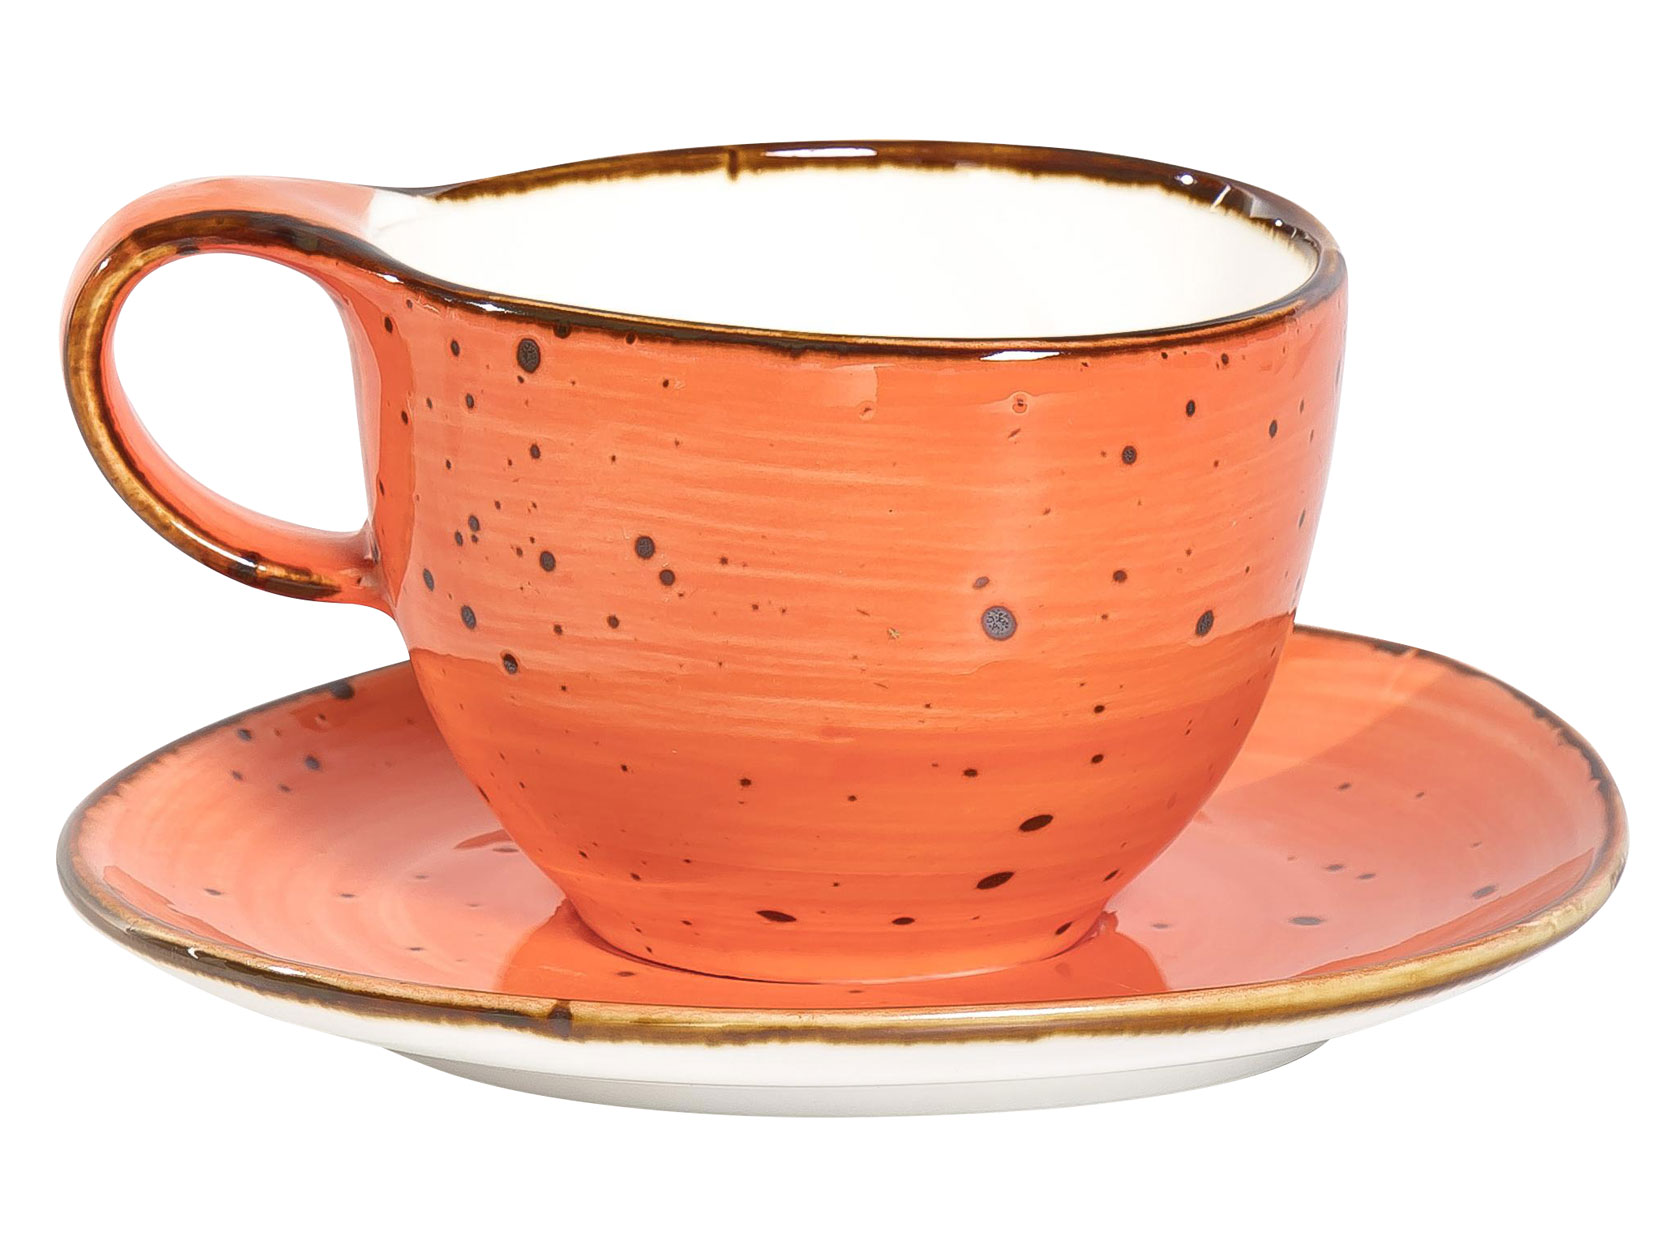 Чайная пара ХОРЕКА КОРАЛЛ, набор чайный (2) чашка 250мл + блюдце 160х150мм, индивид.упаковка - гофрокороб Хорека Коралл фото 1